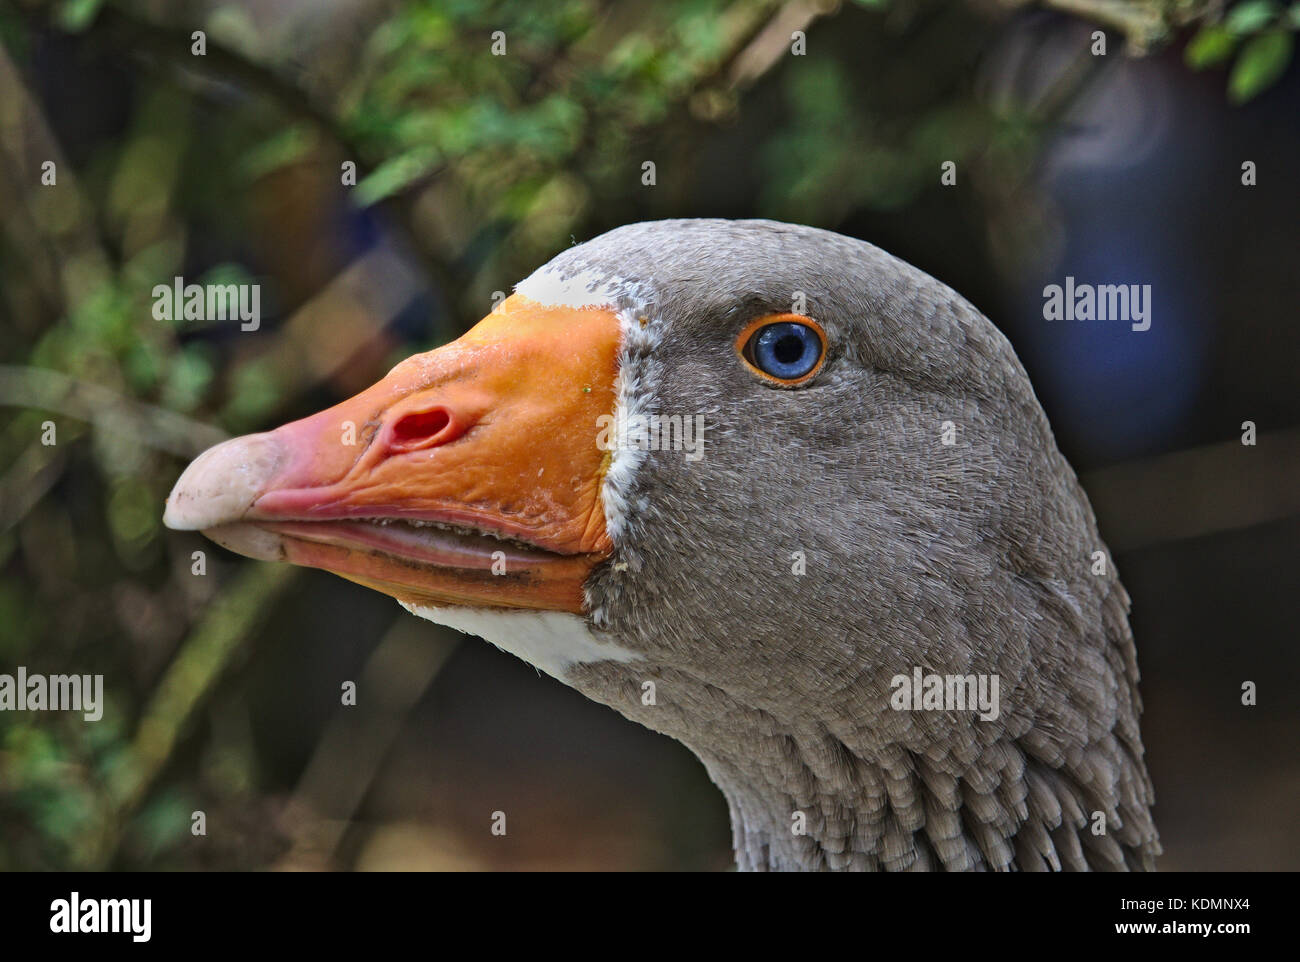 Retrato de un ganso con llamativos ojos azules Foto de stock